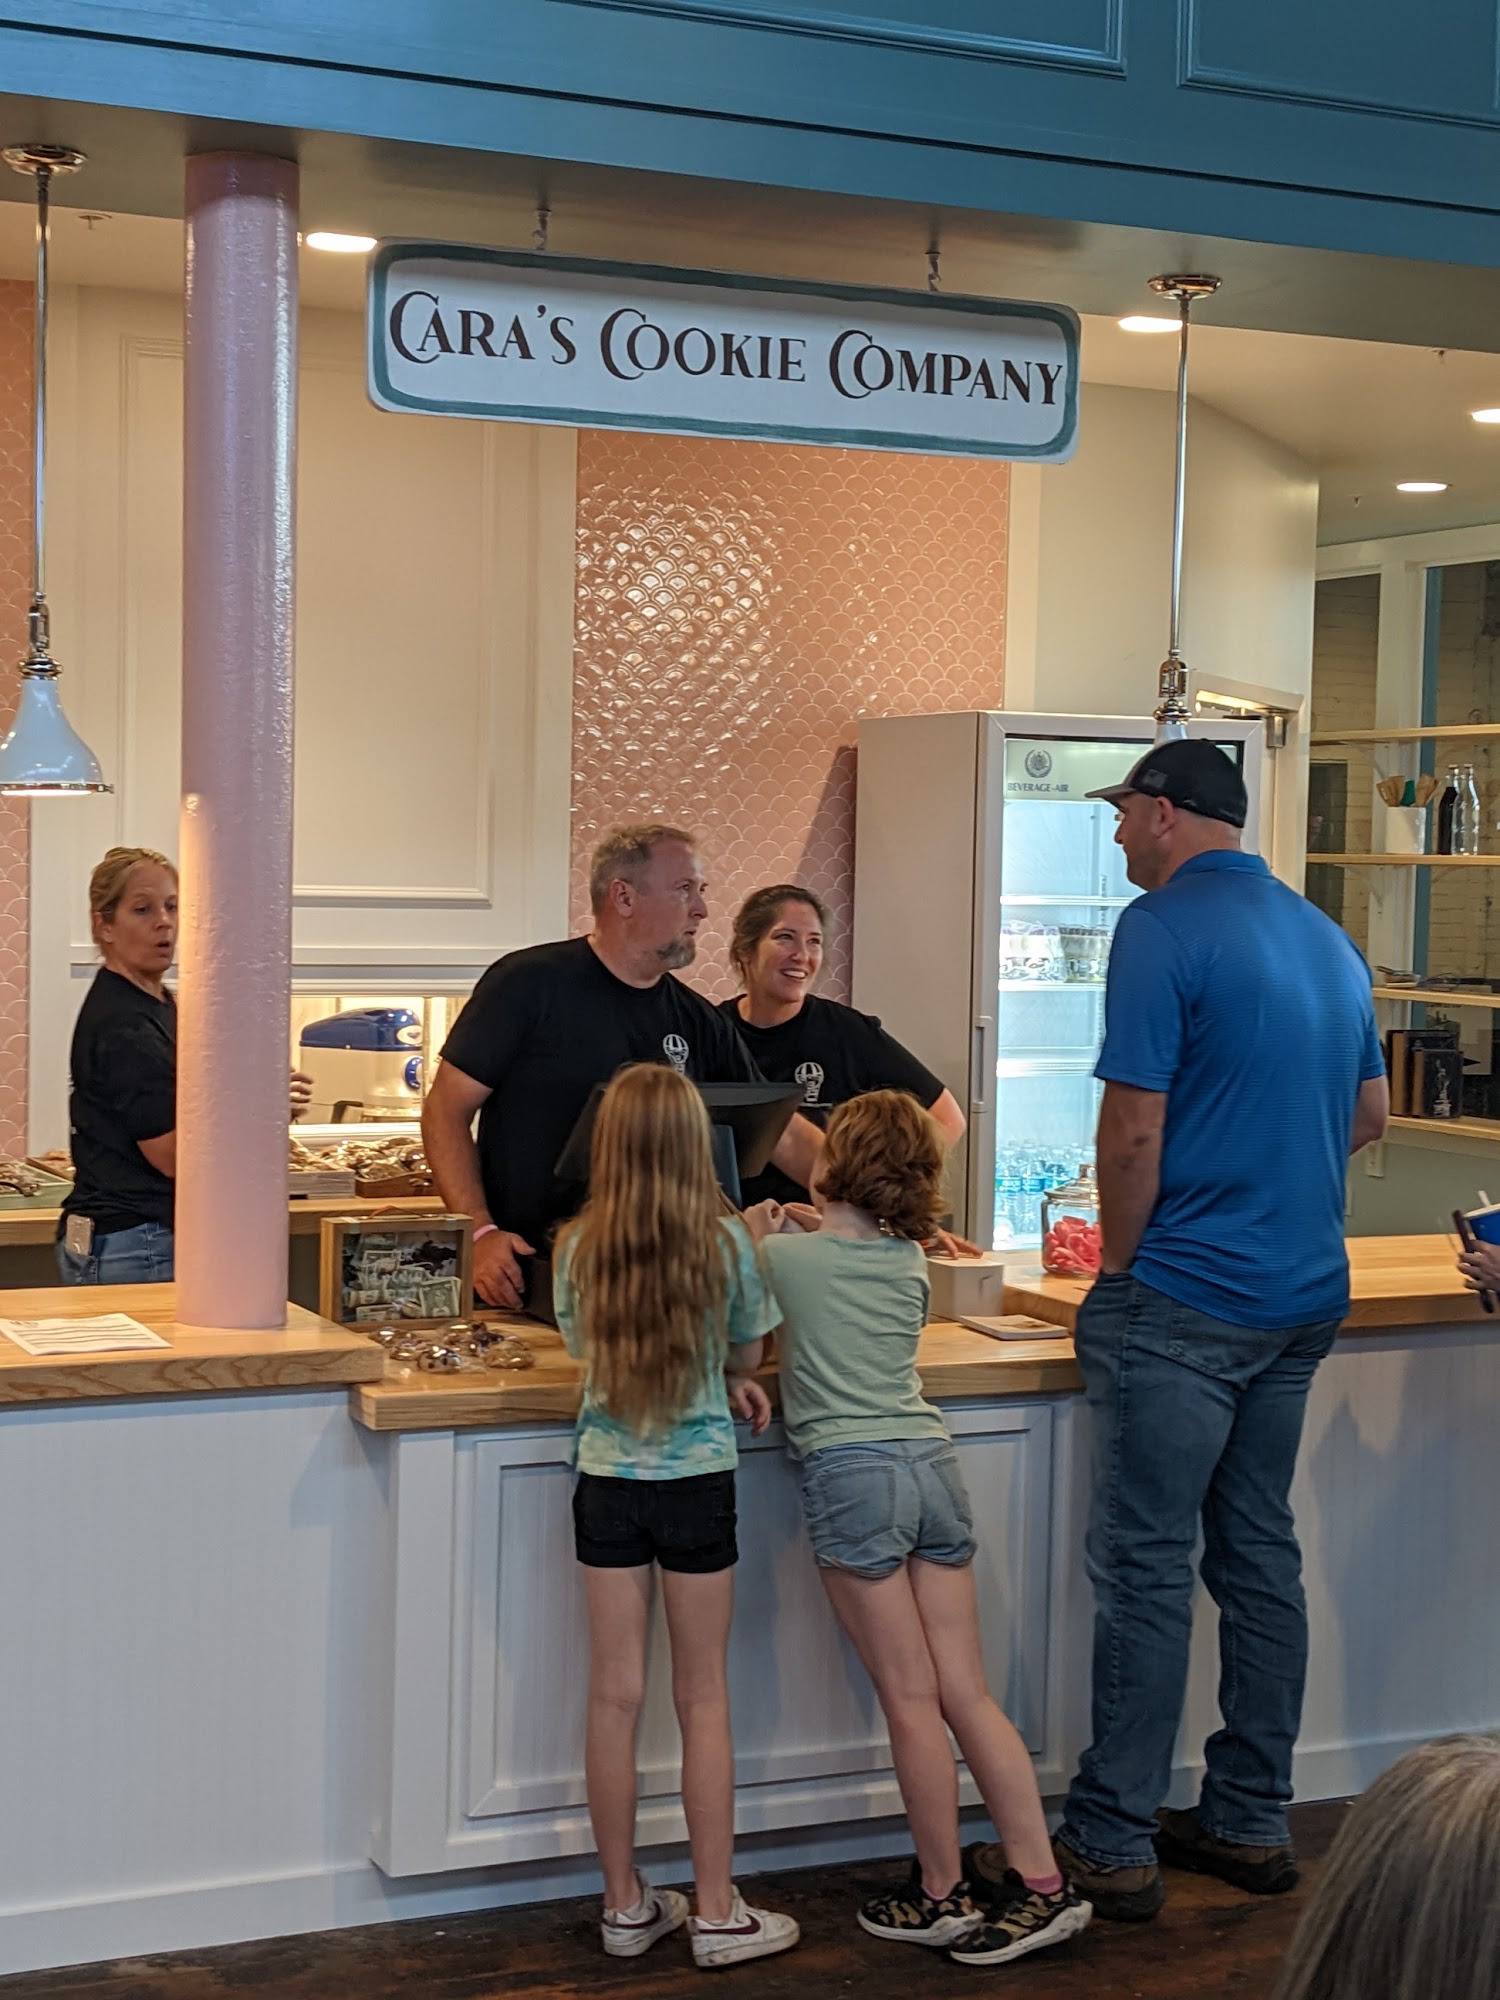 Cara's Cookie Company